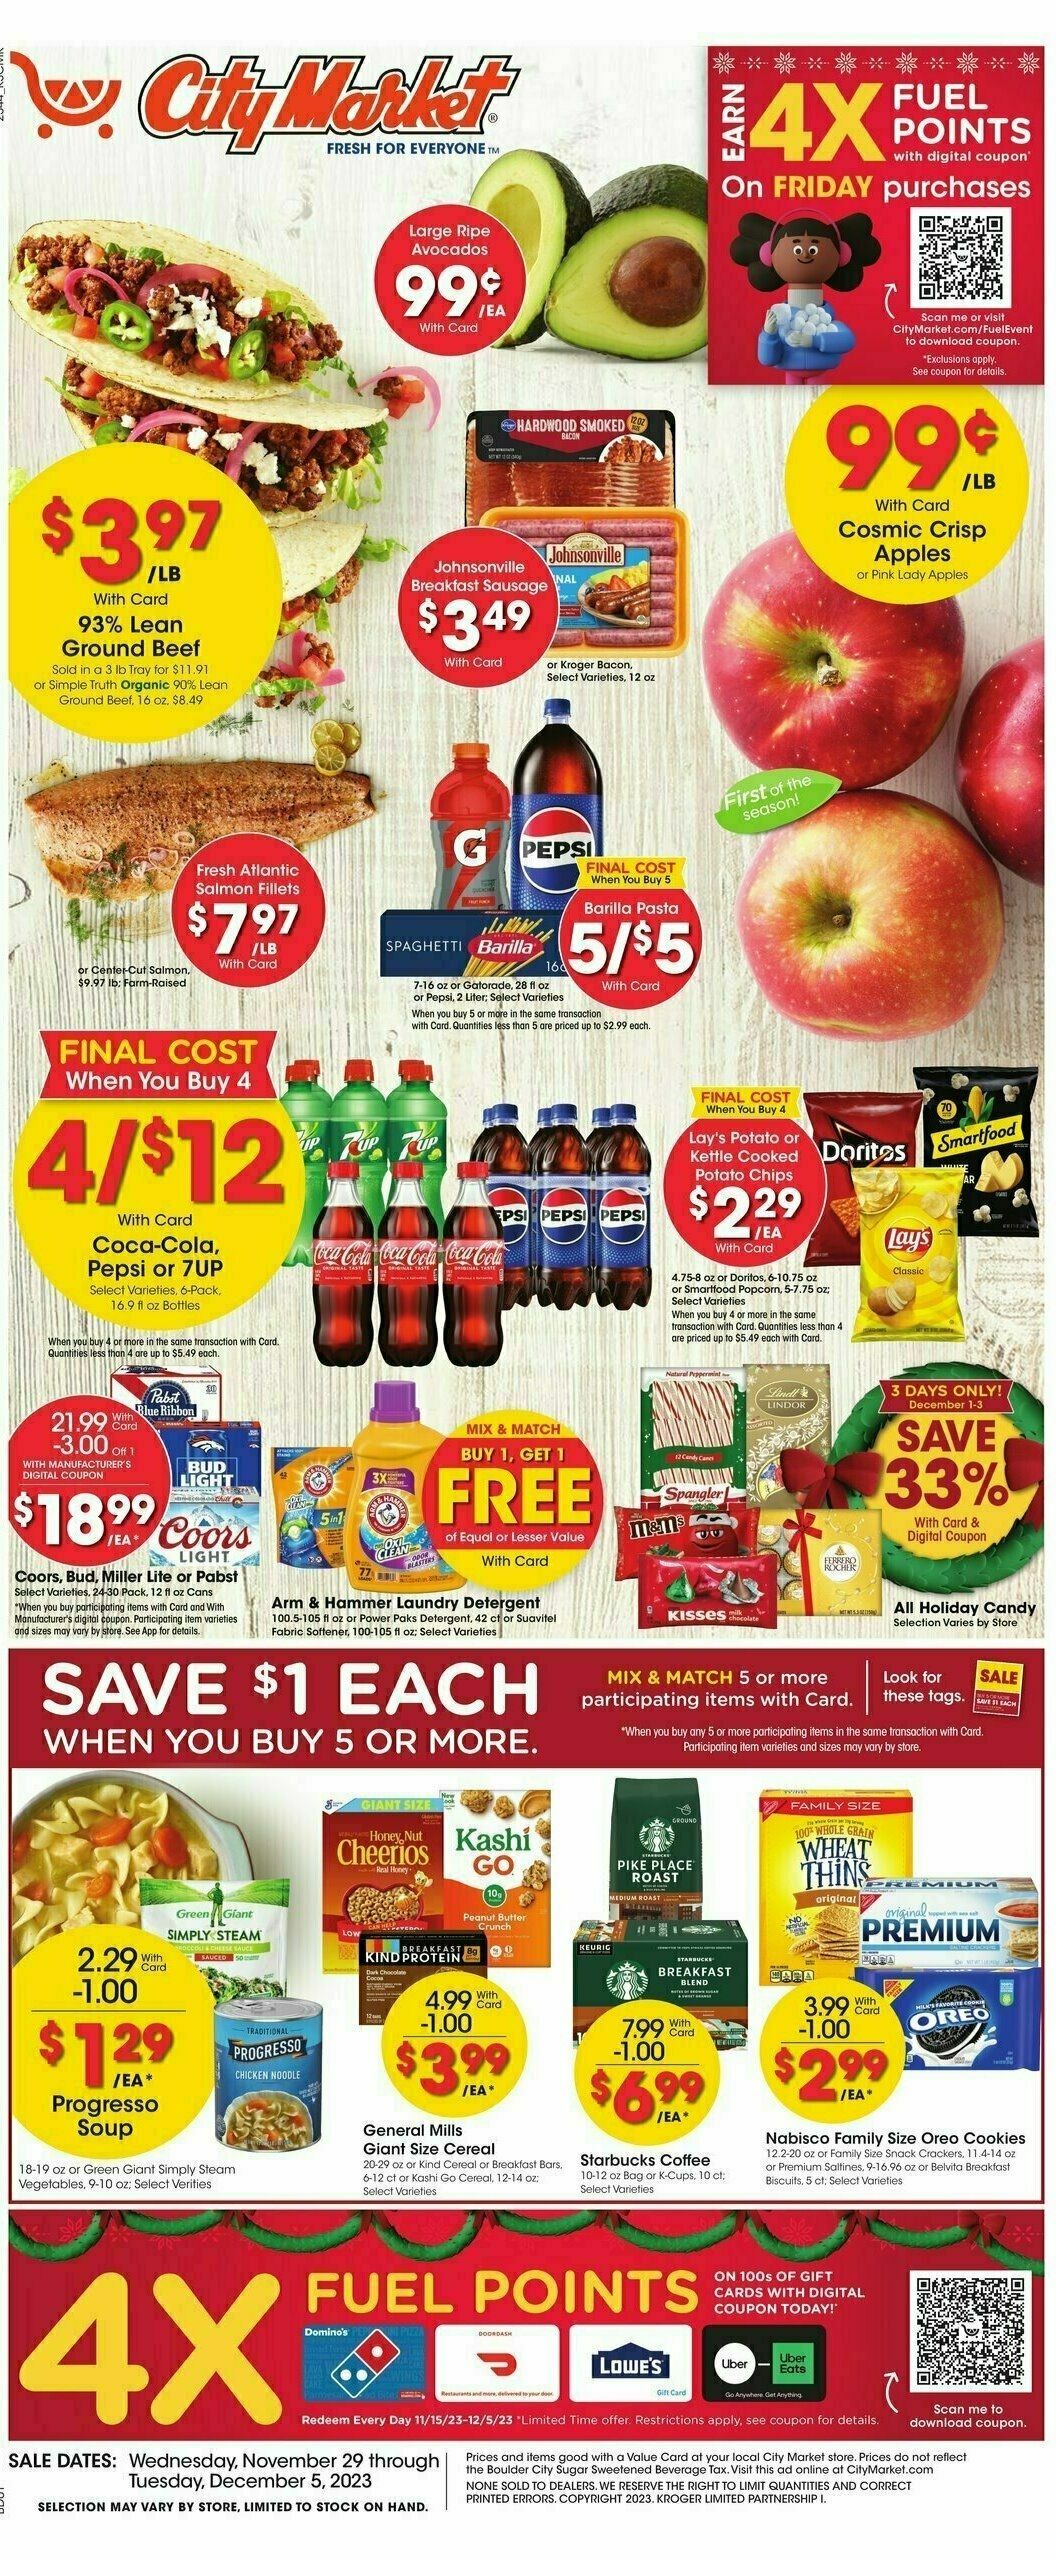 City Market Weekly Ad from November 29